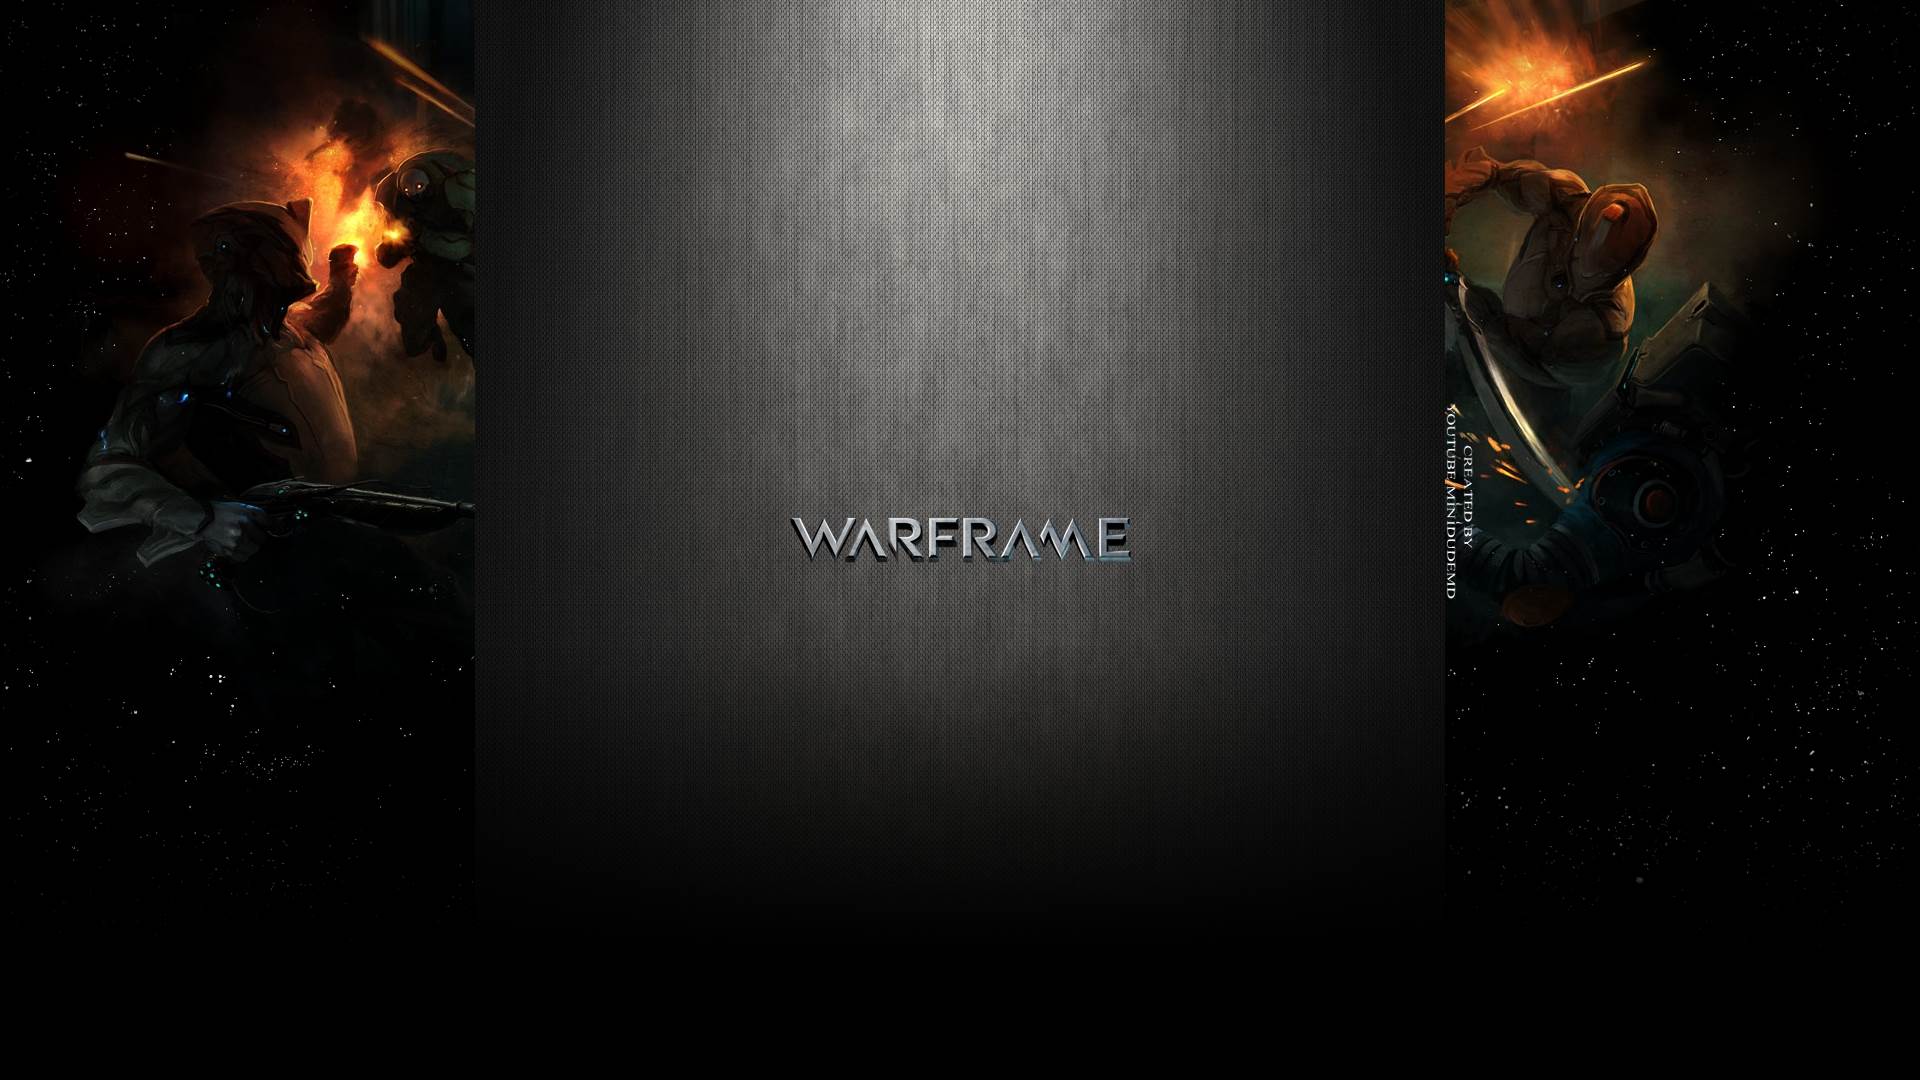 warframe wallpaper GamingBoltcom Video Game News Reviews 1920x1080